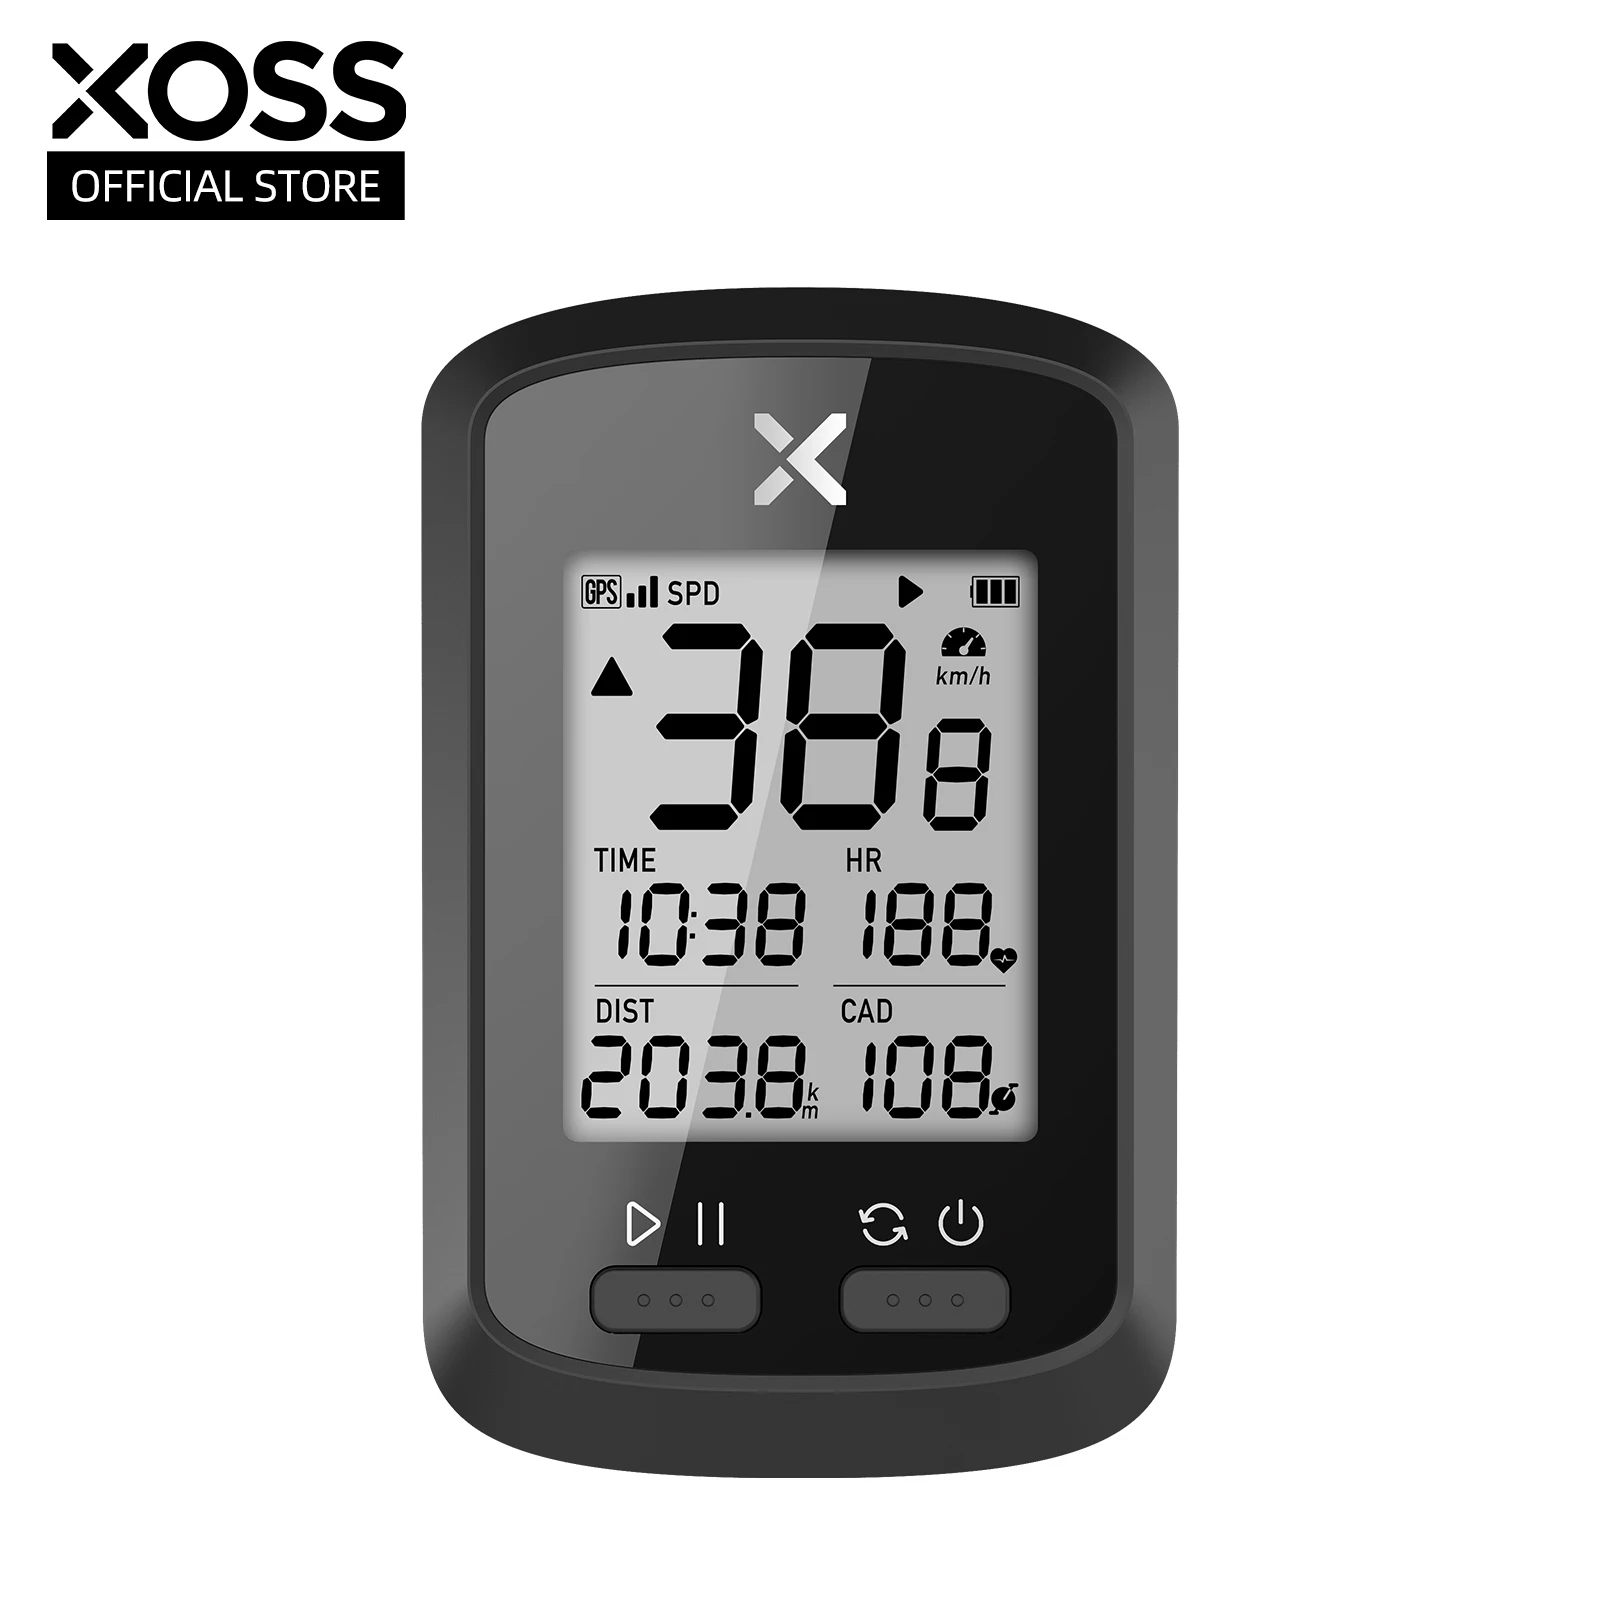 
XOSS G  wireless GPS Road bike lcd digital cateye speedometer cycle odometer bicycle computer for mtb bike cycle  (1600261735083)